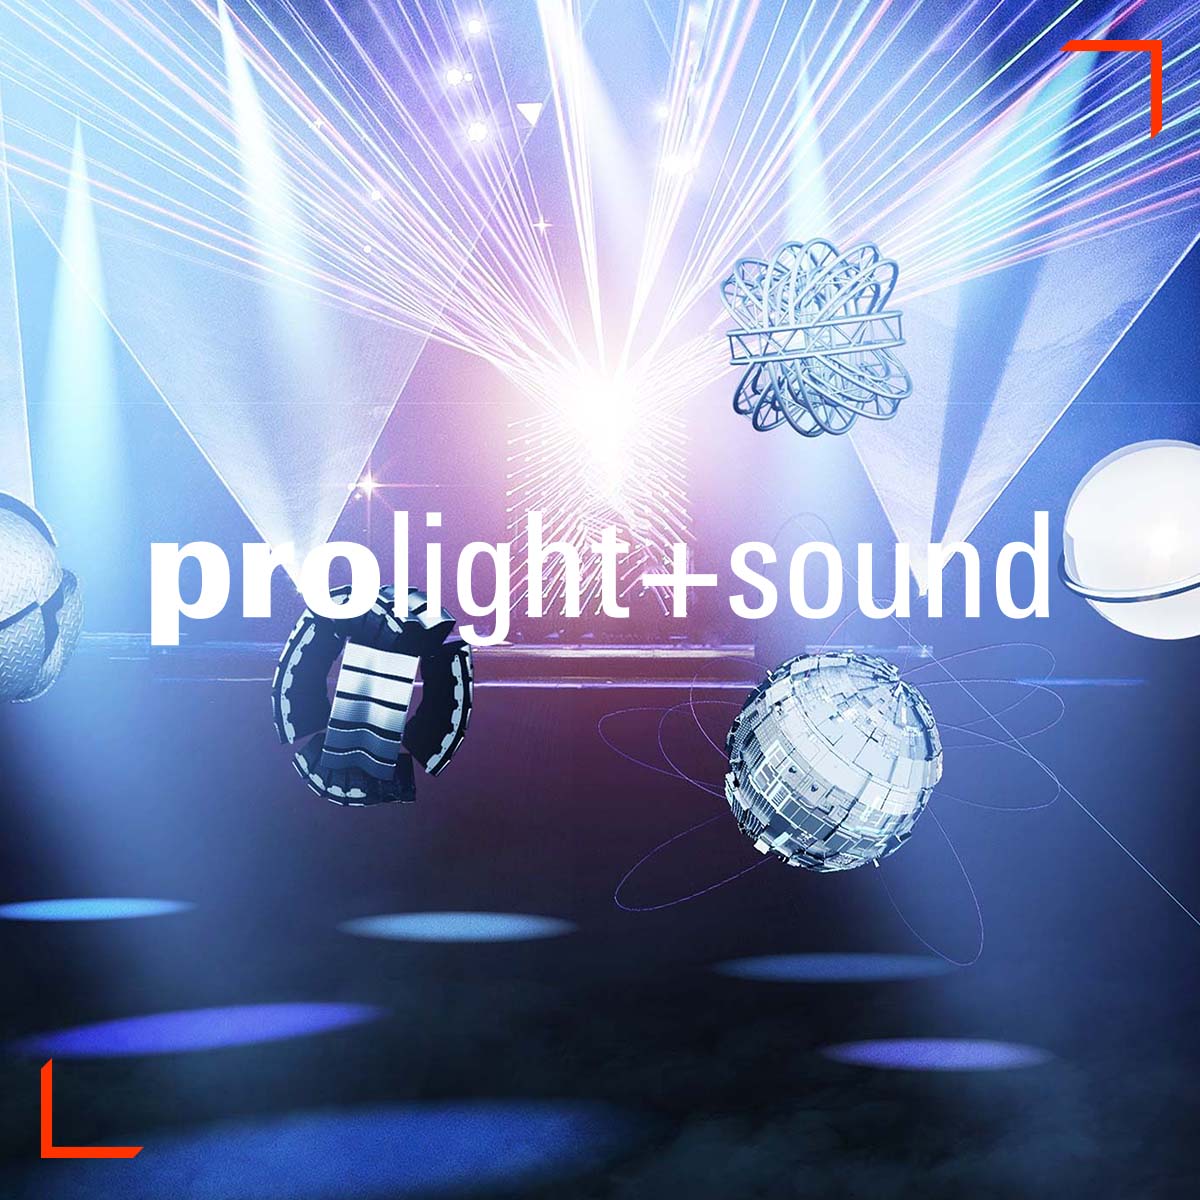 ISCVE Pro Light & Sound 1200px Square Image